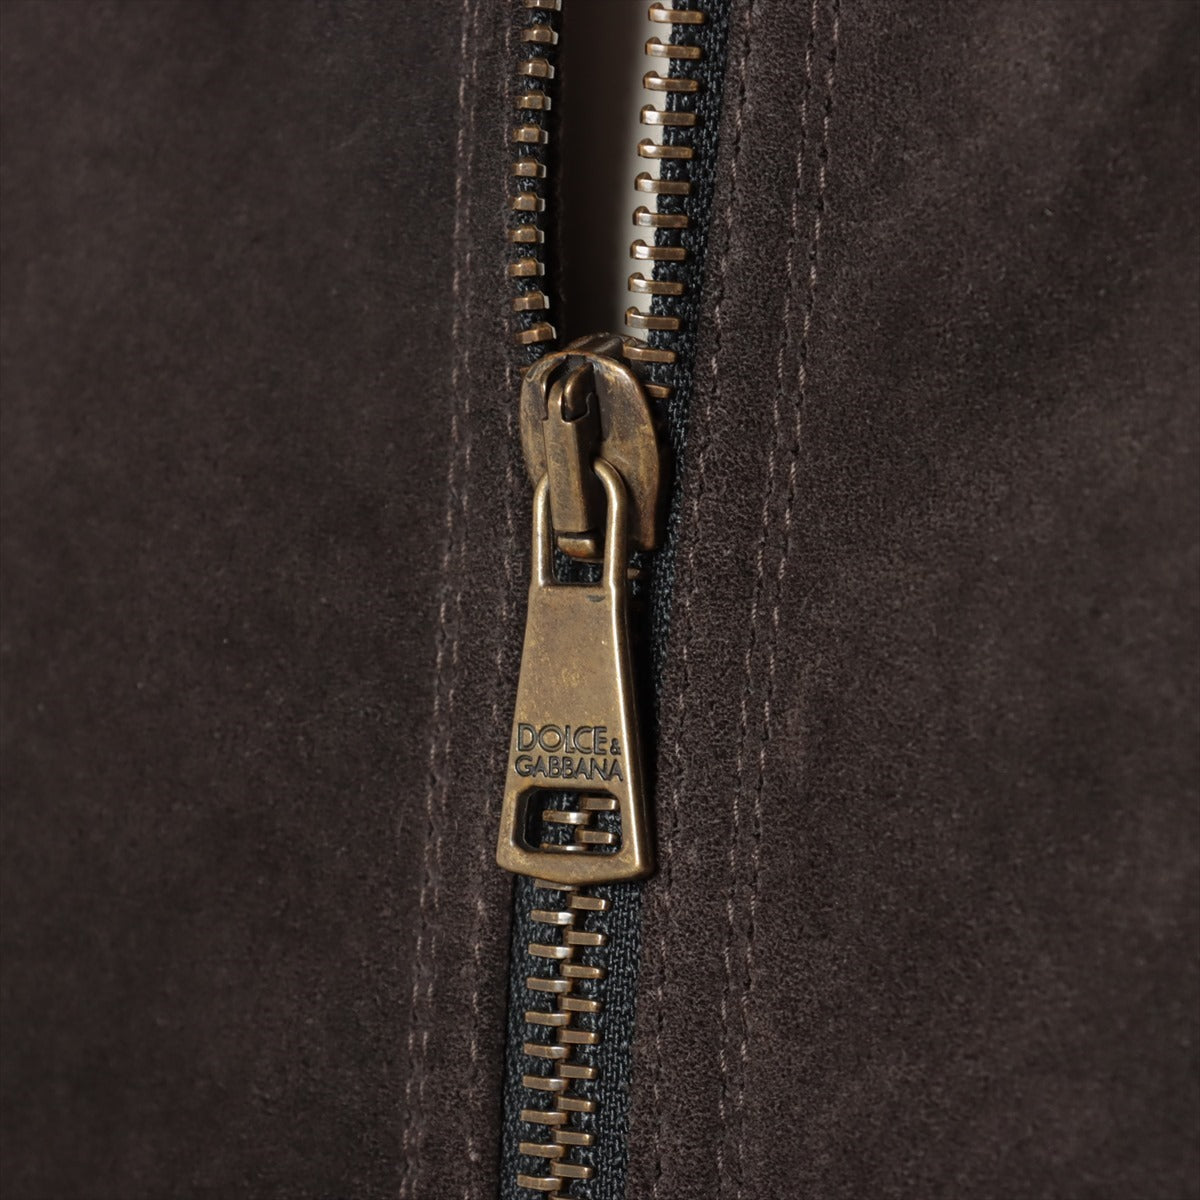 Dolce & Gabbana Unknown material Jacket No size notation Men's Black × Brown  G9K60L